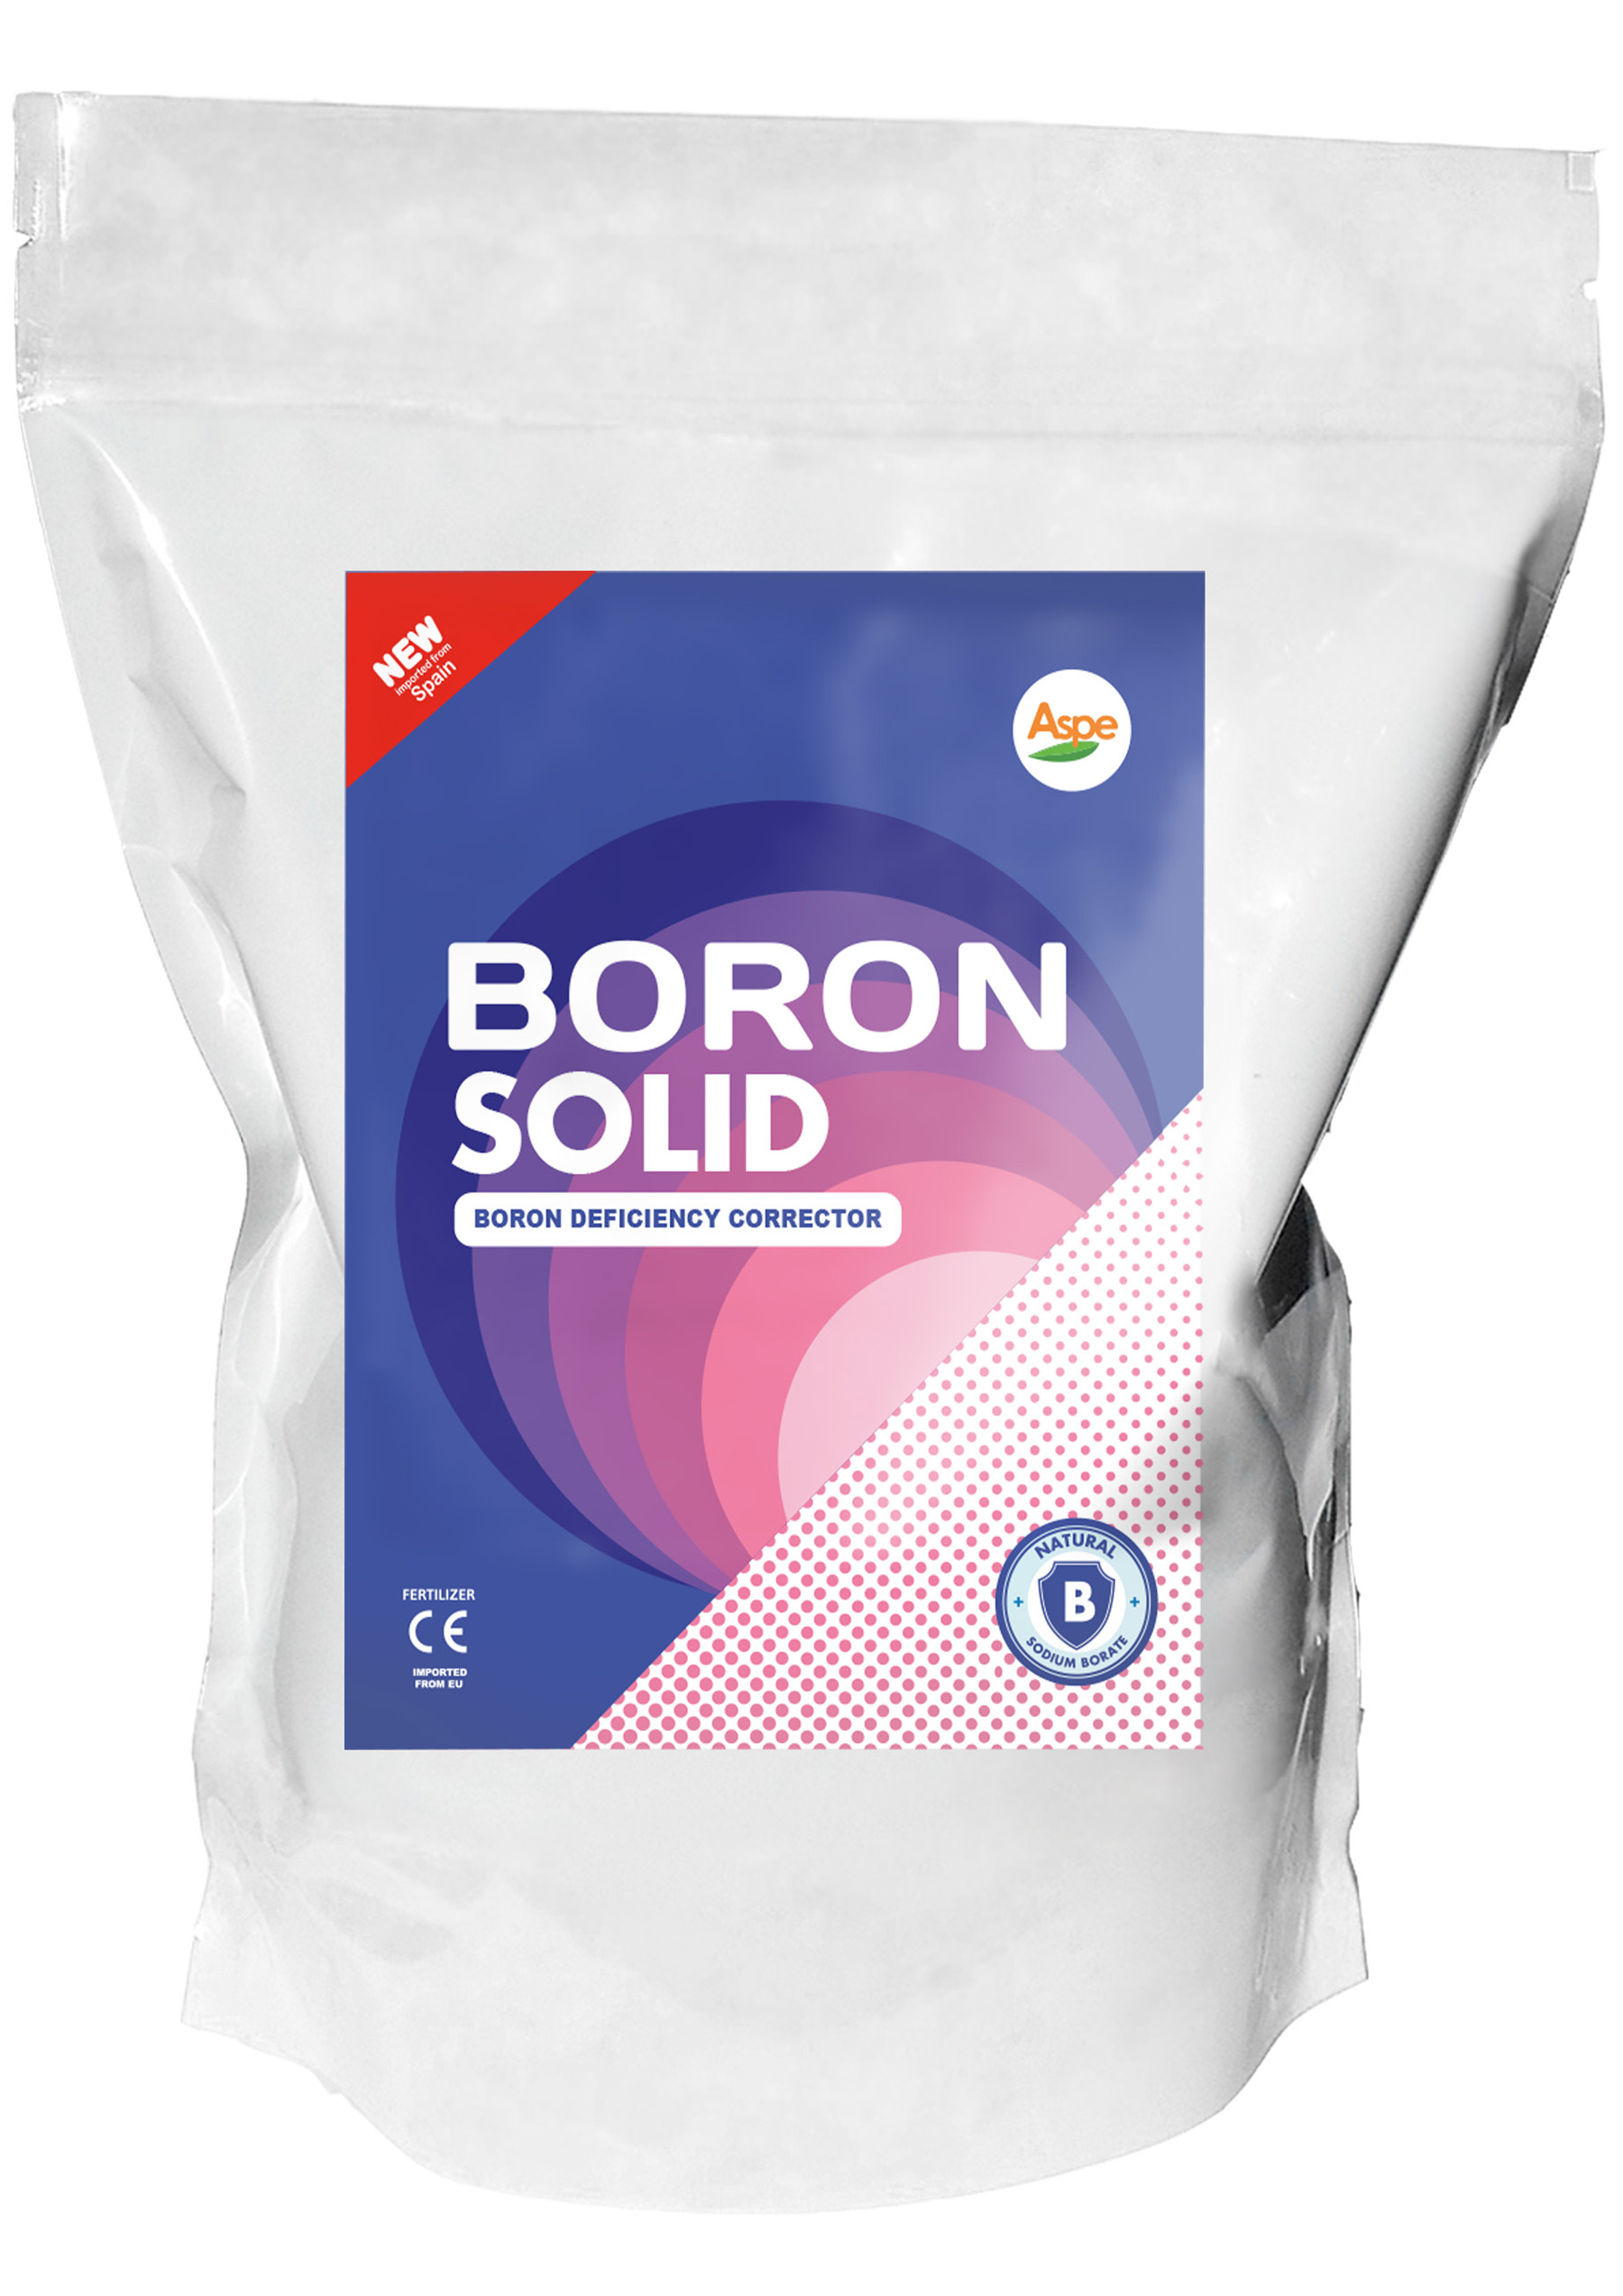 Boron SolidComposition / %w/vBoron (B) 20,50